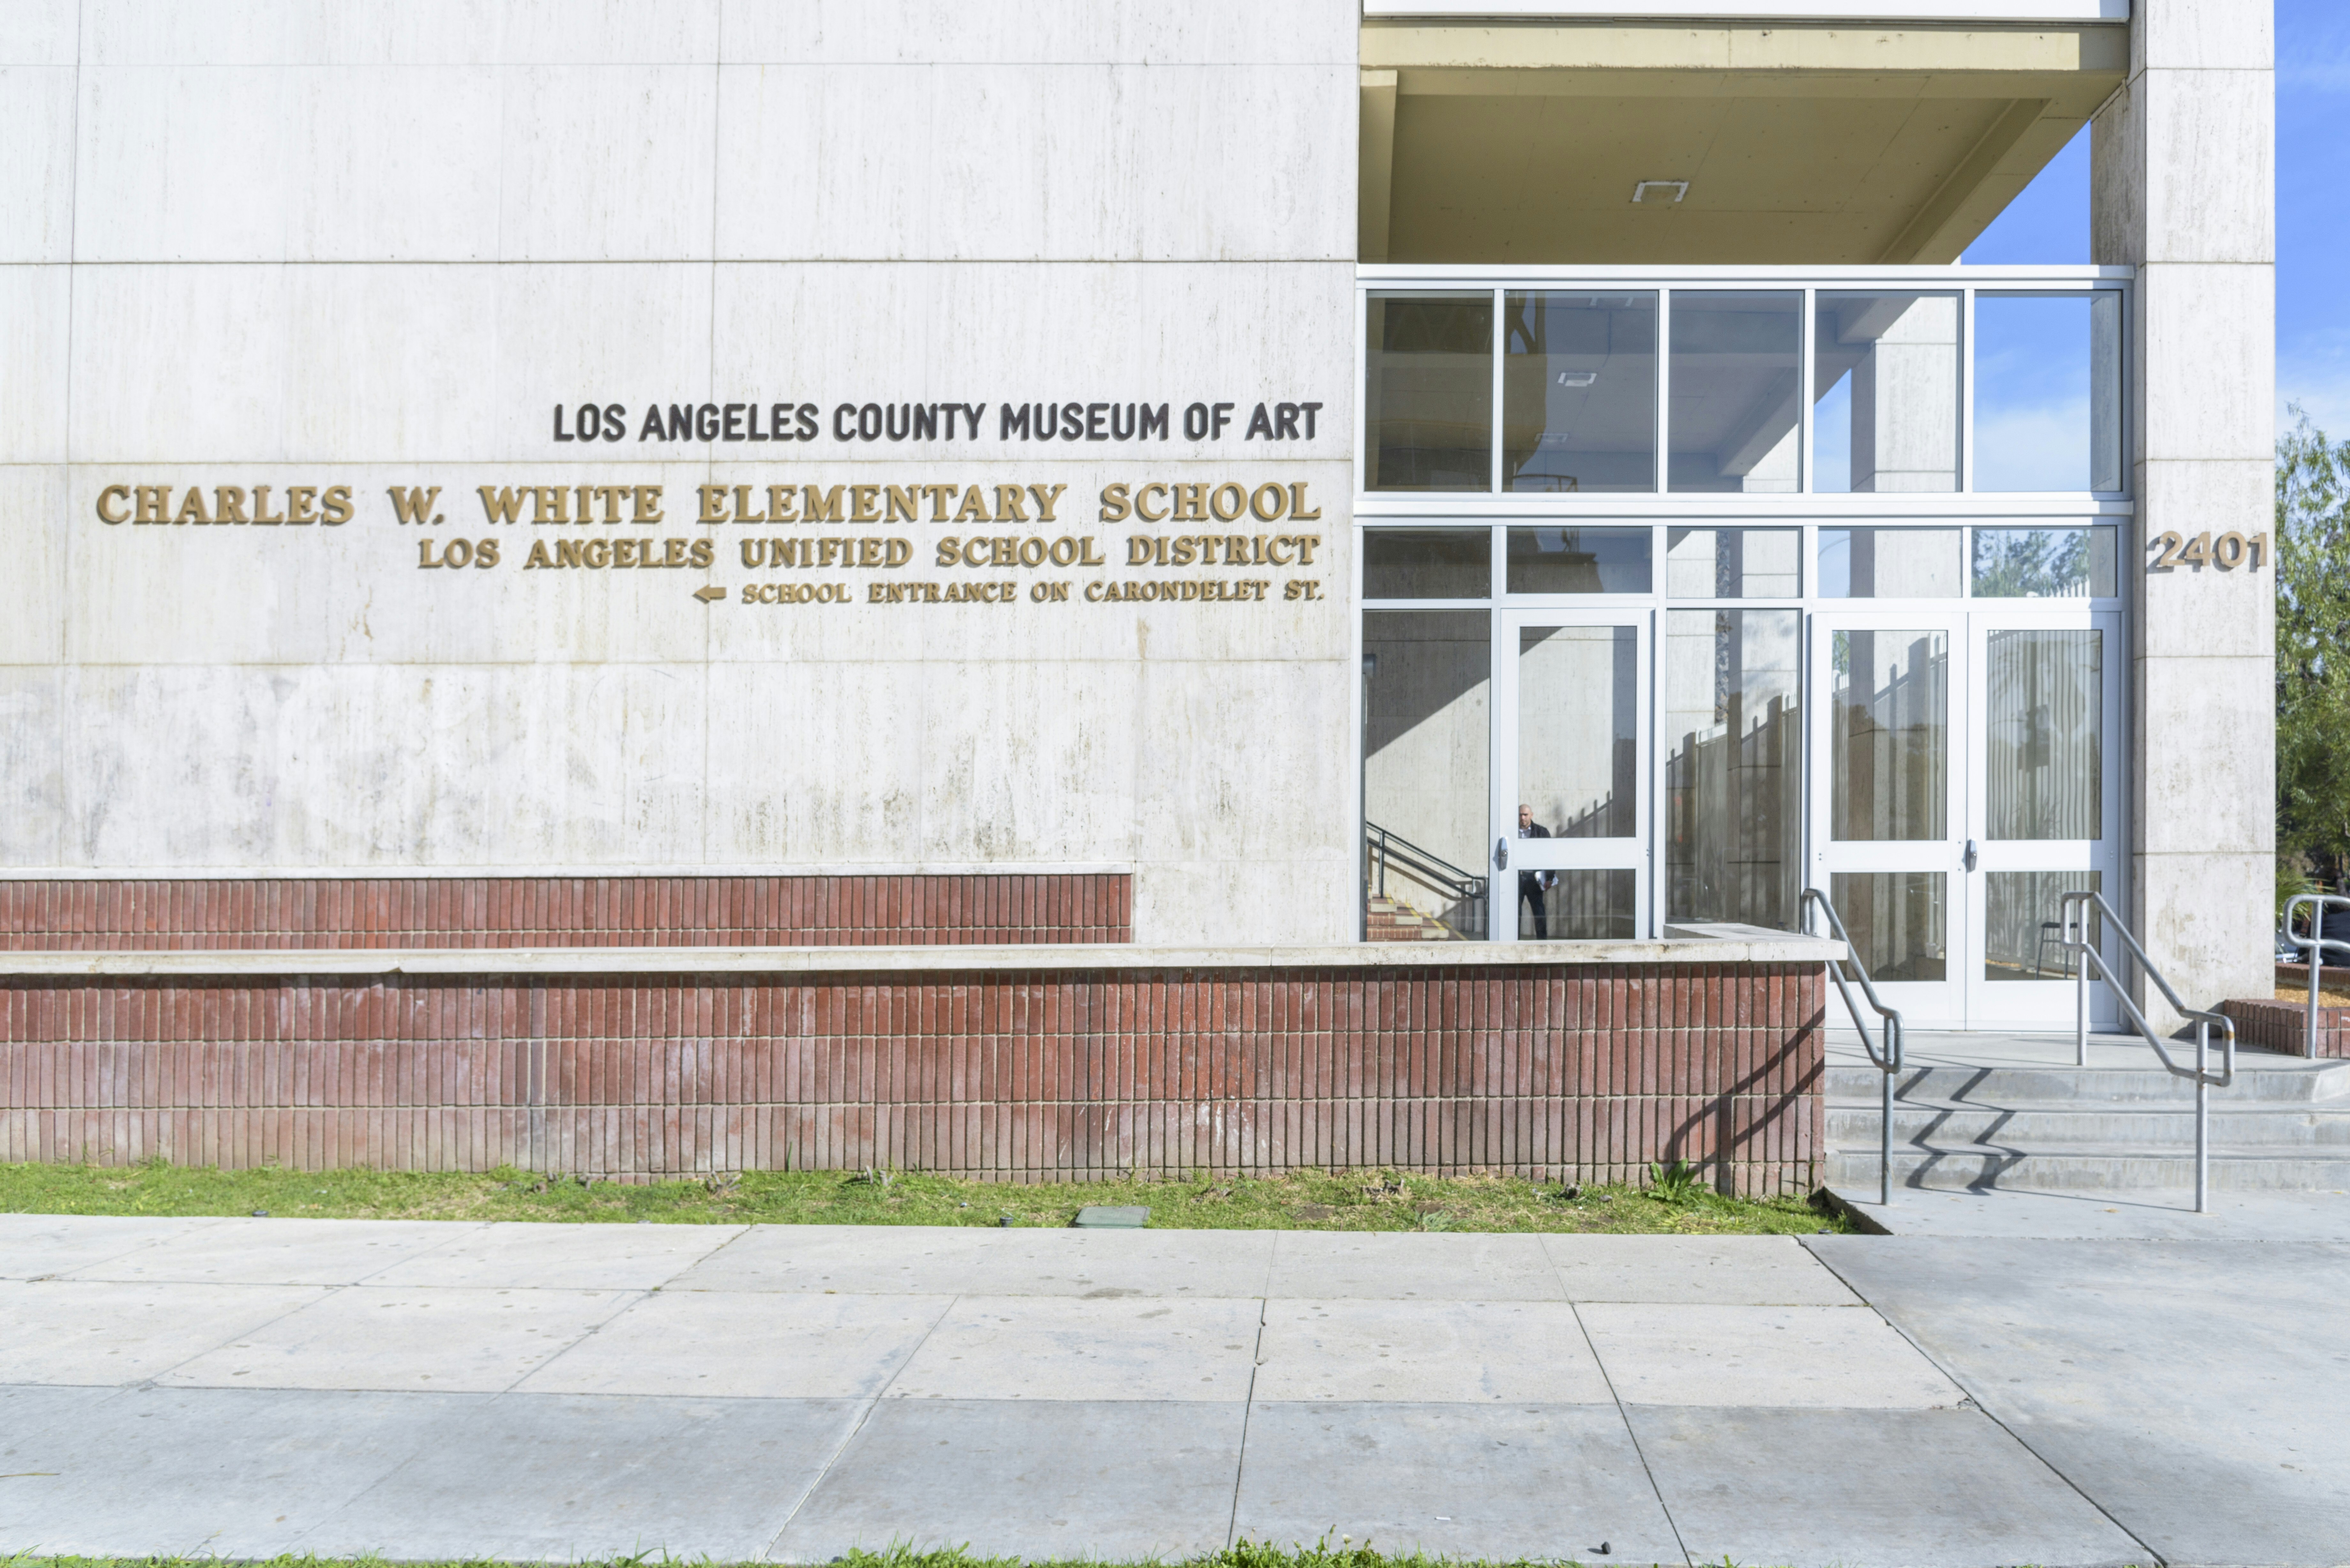 Charles White Elementary School Gallery. © Museum Associates/LACMA.